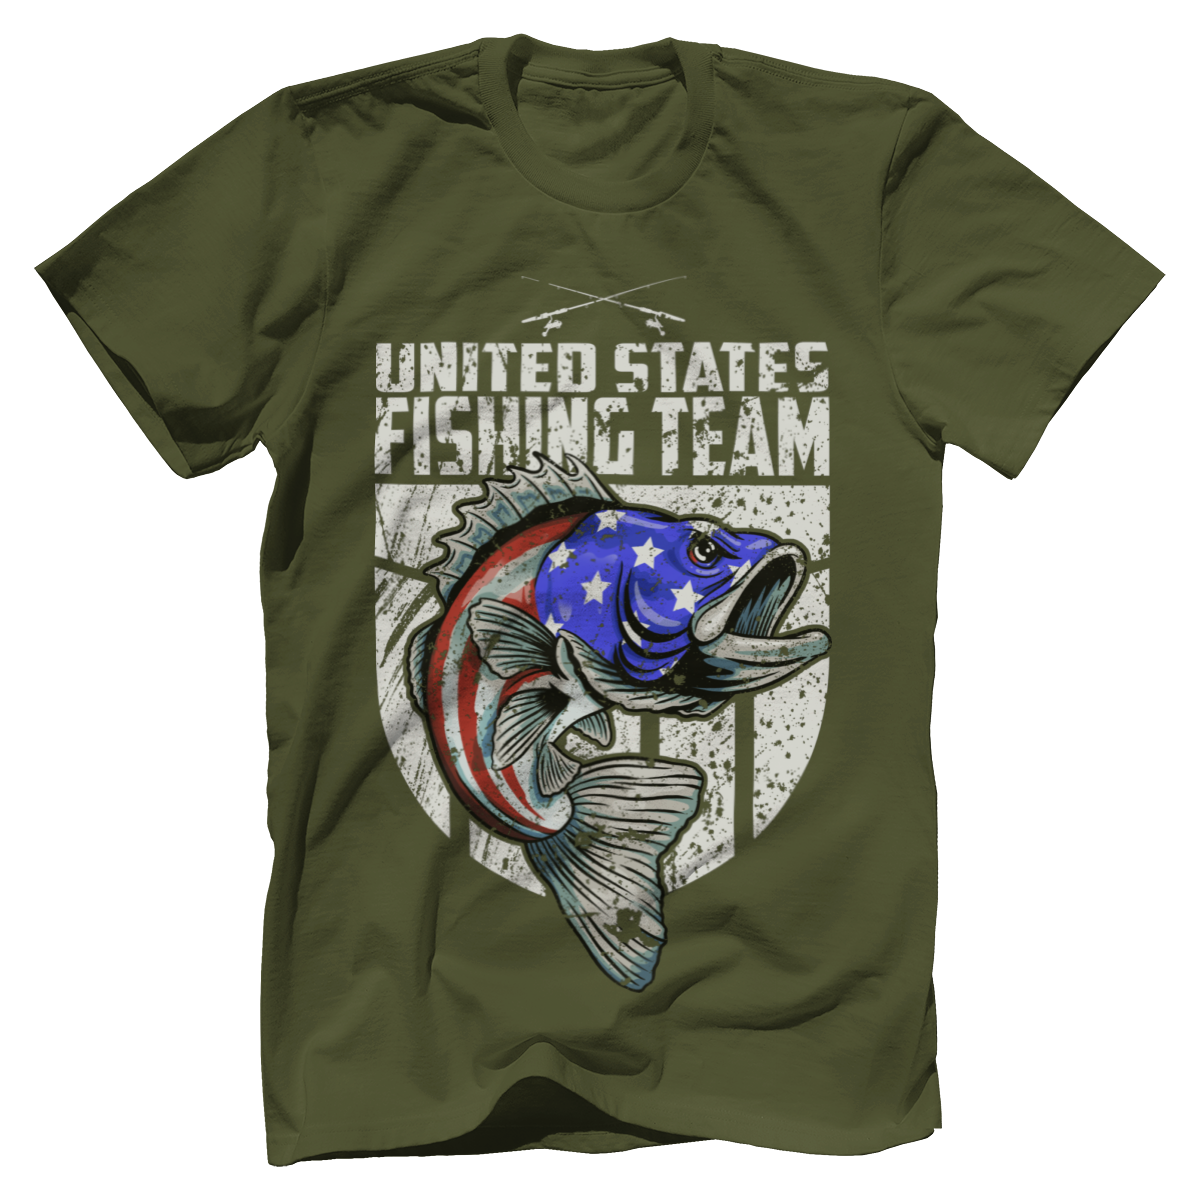 USA Fishing Team